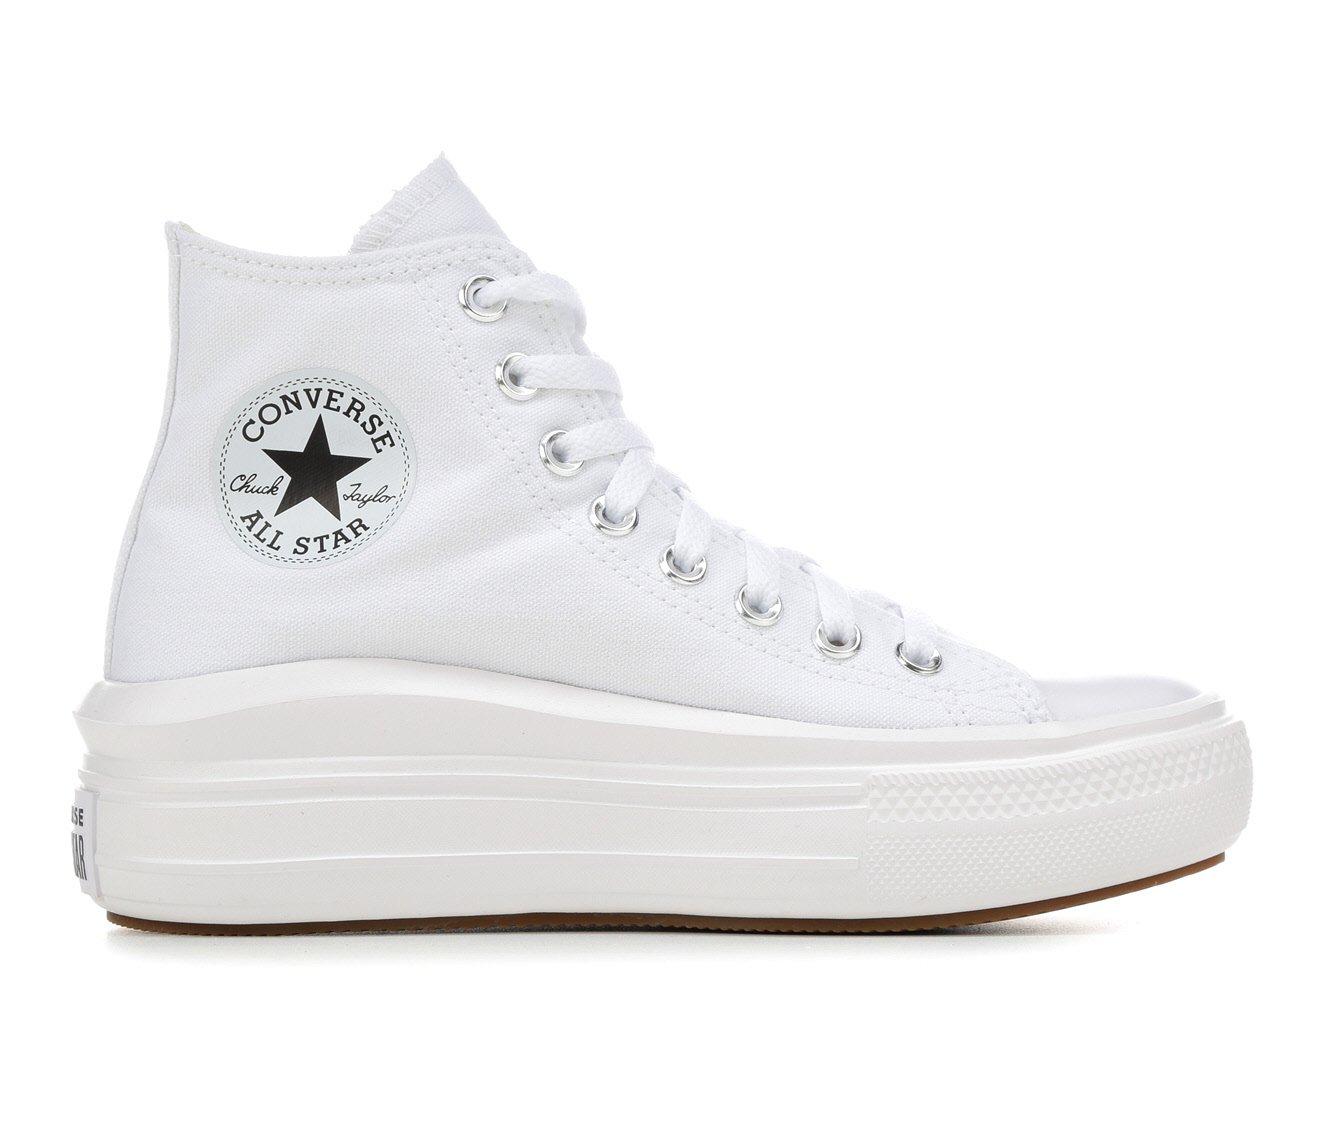 Converse Chuck Taylor All Star Lo Sneaker - Navy